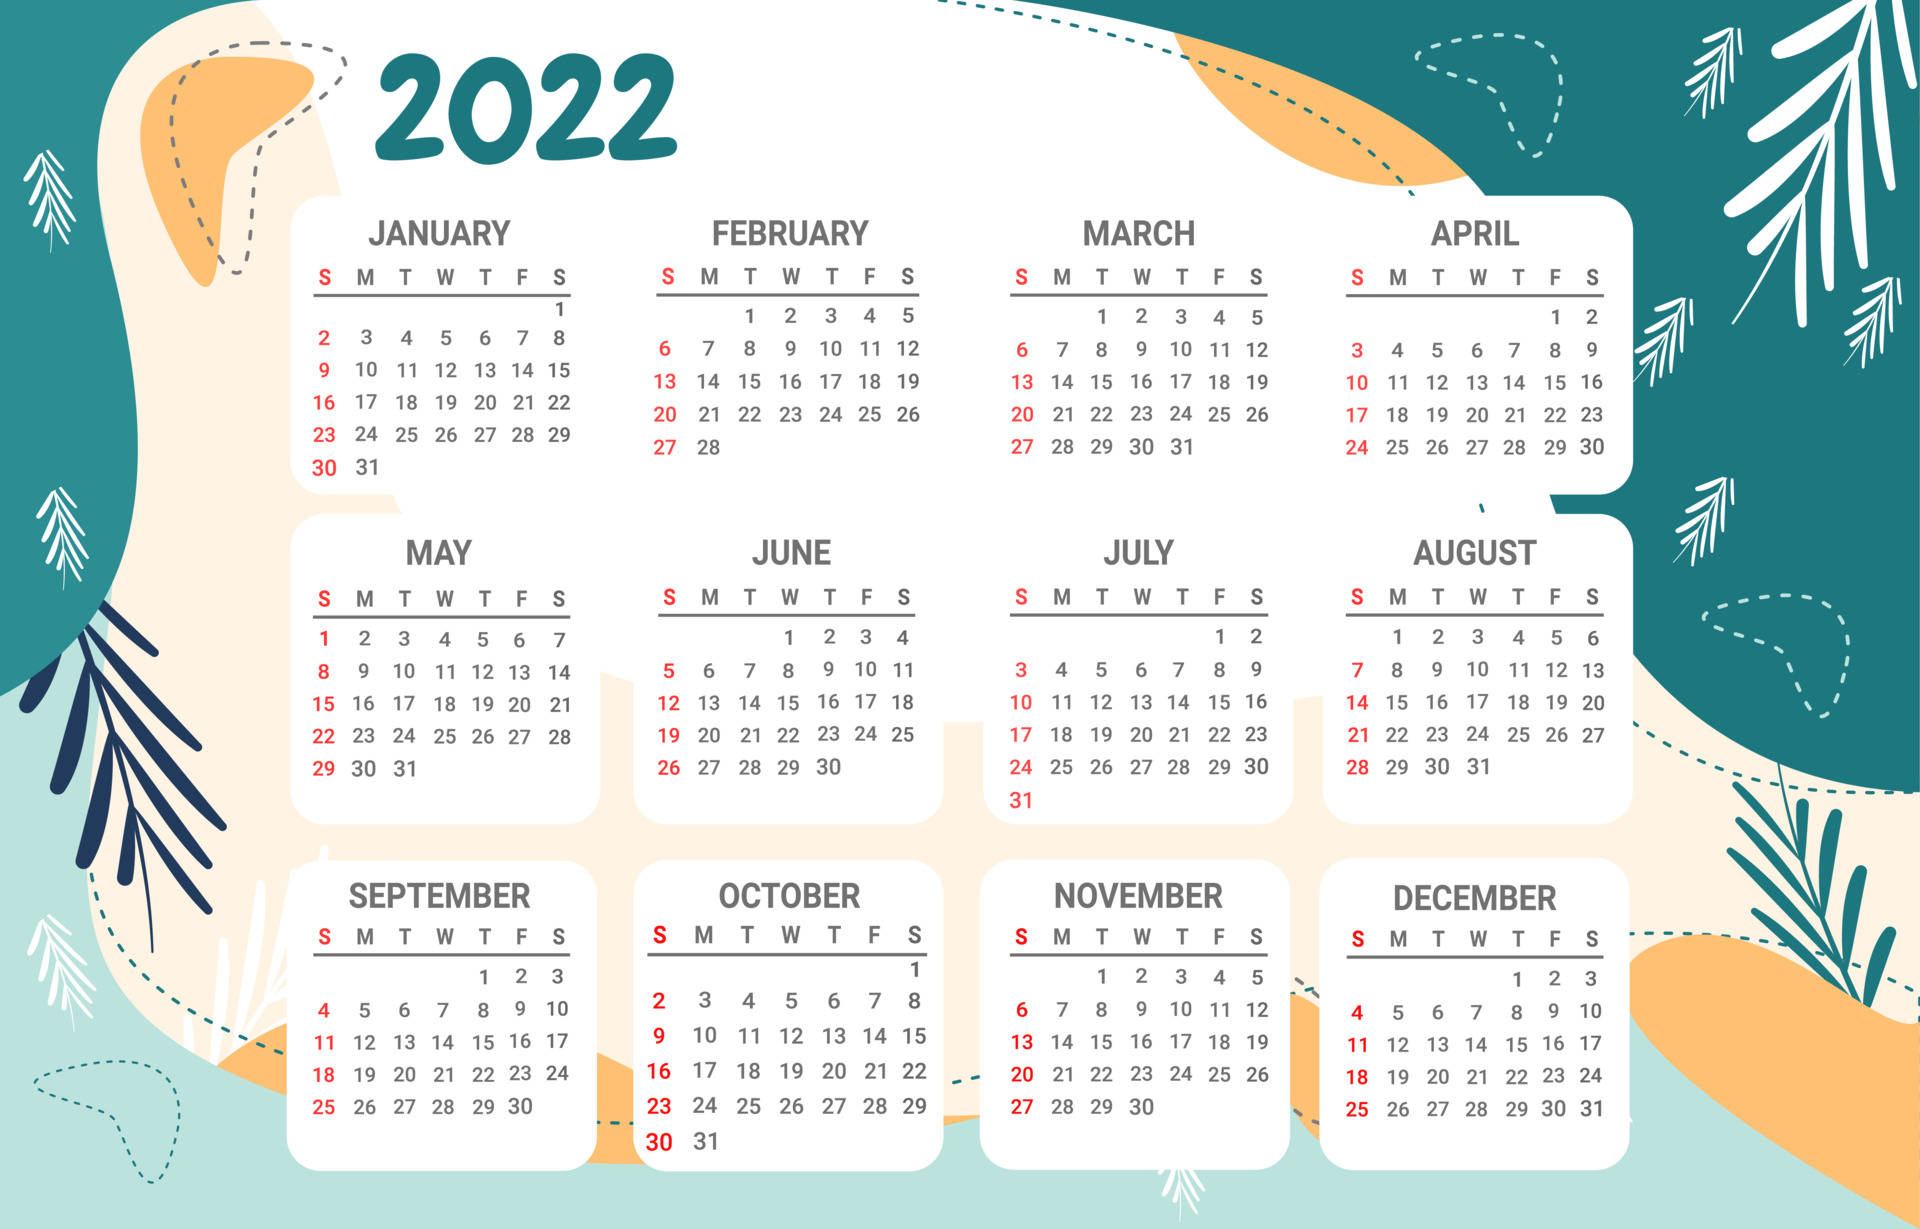 2022 Tropical Themed Calendar Background